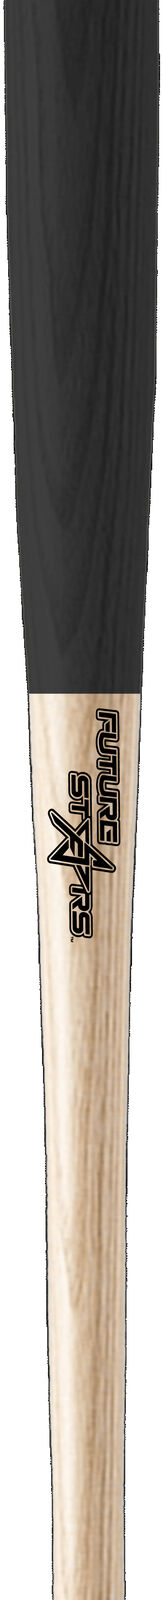 34" Pro-Style Baseball Bat - Big Barrel 2.4" - Two-Tone Black Barrel and Natural